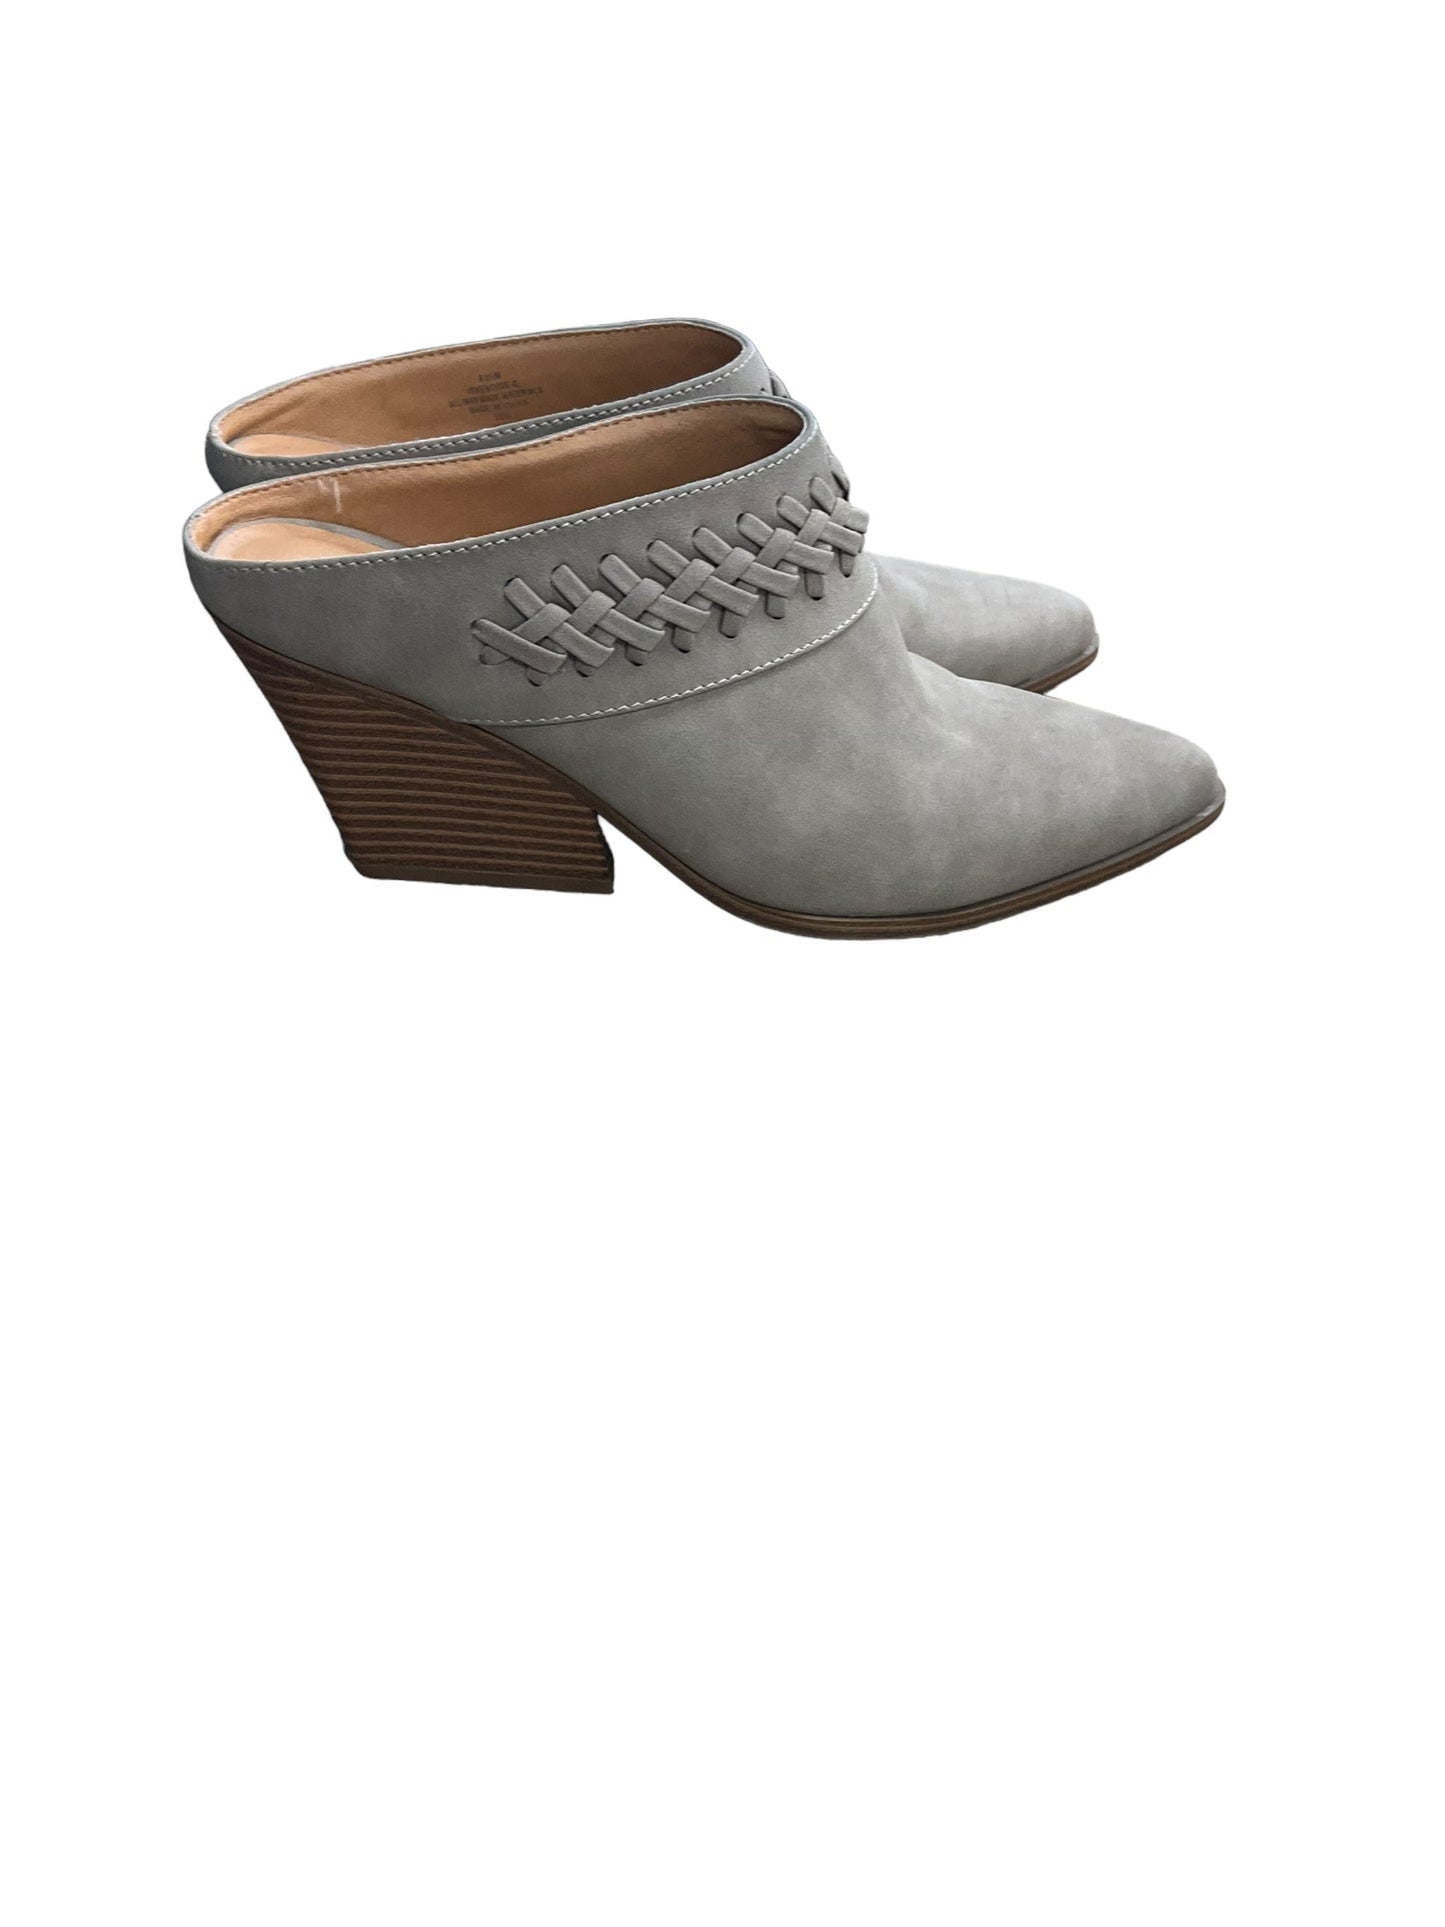 Beige Boots Ankle Heels Indigo Rd, Size 8.5